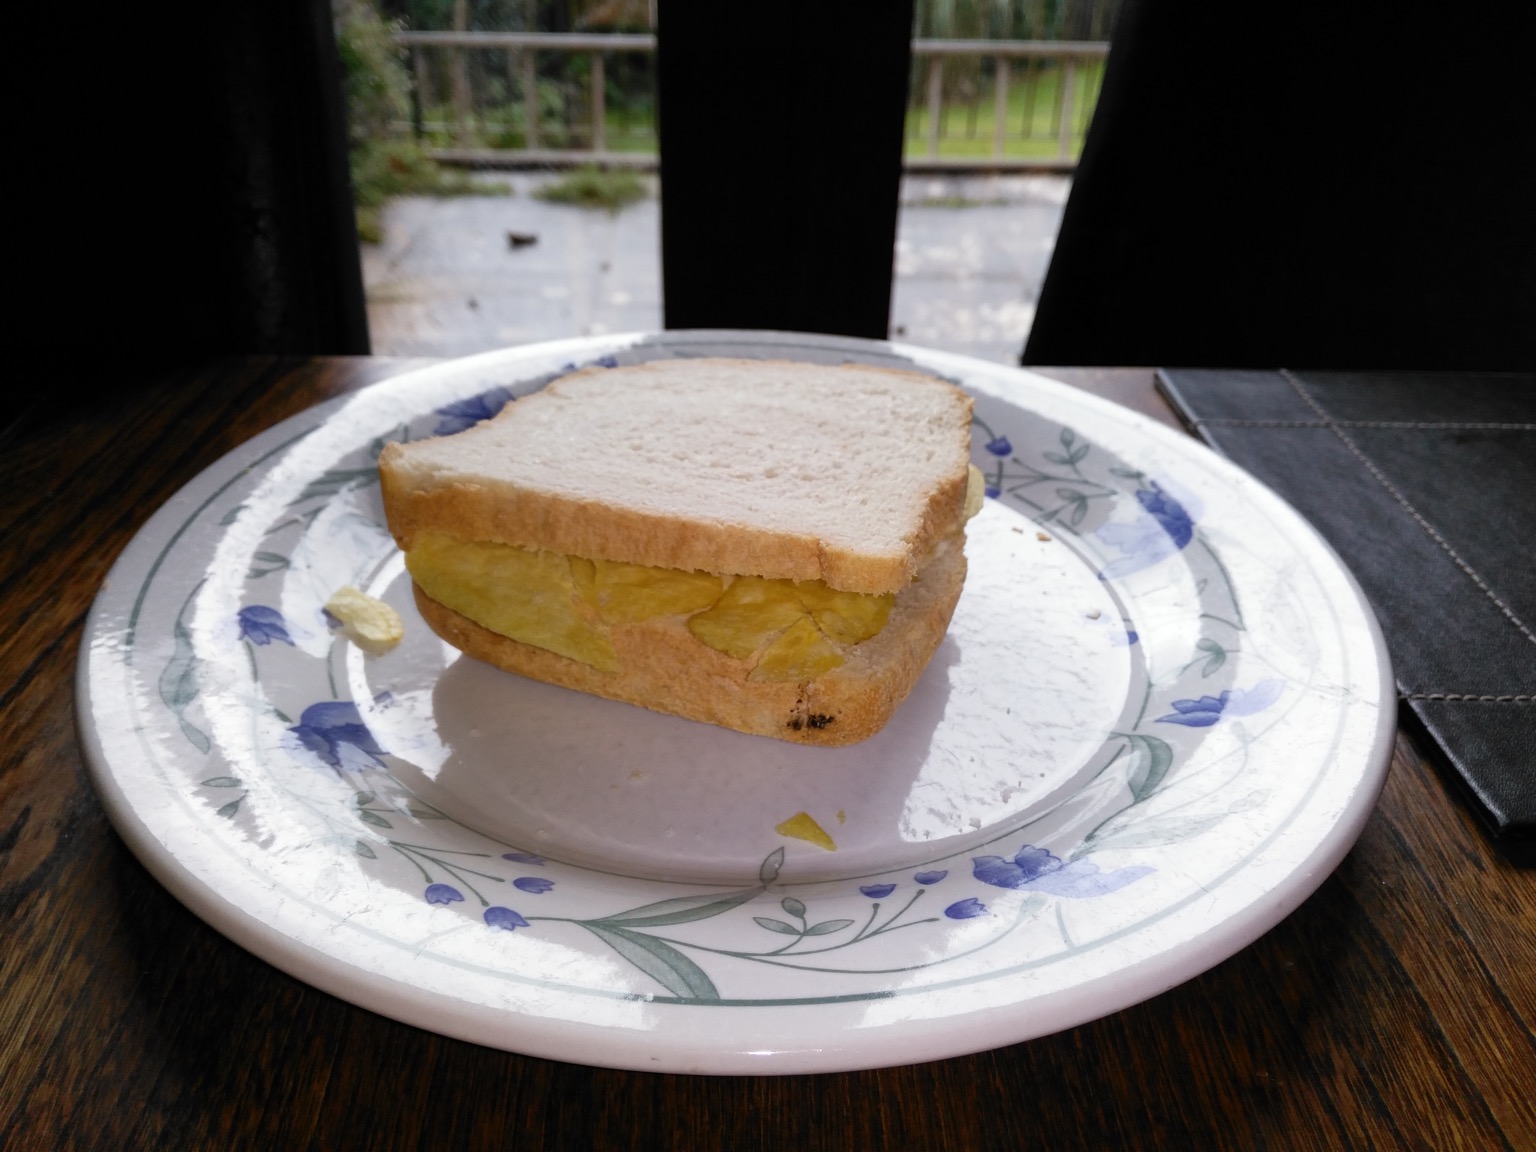 White crisp sandwich with crust base